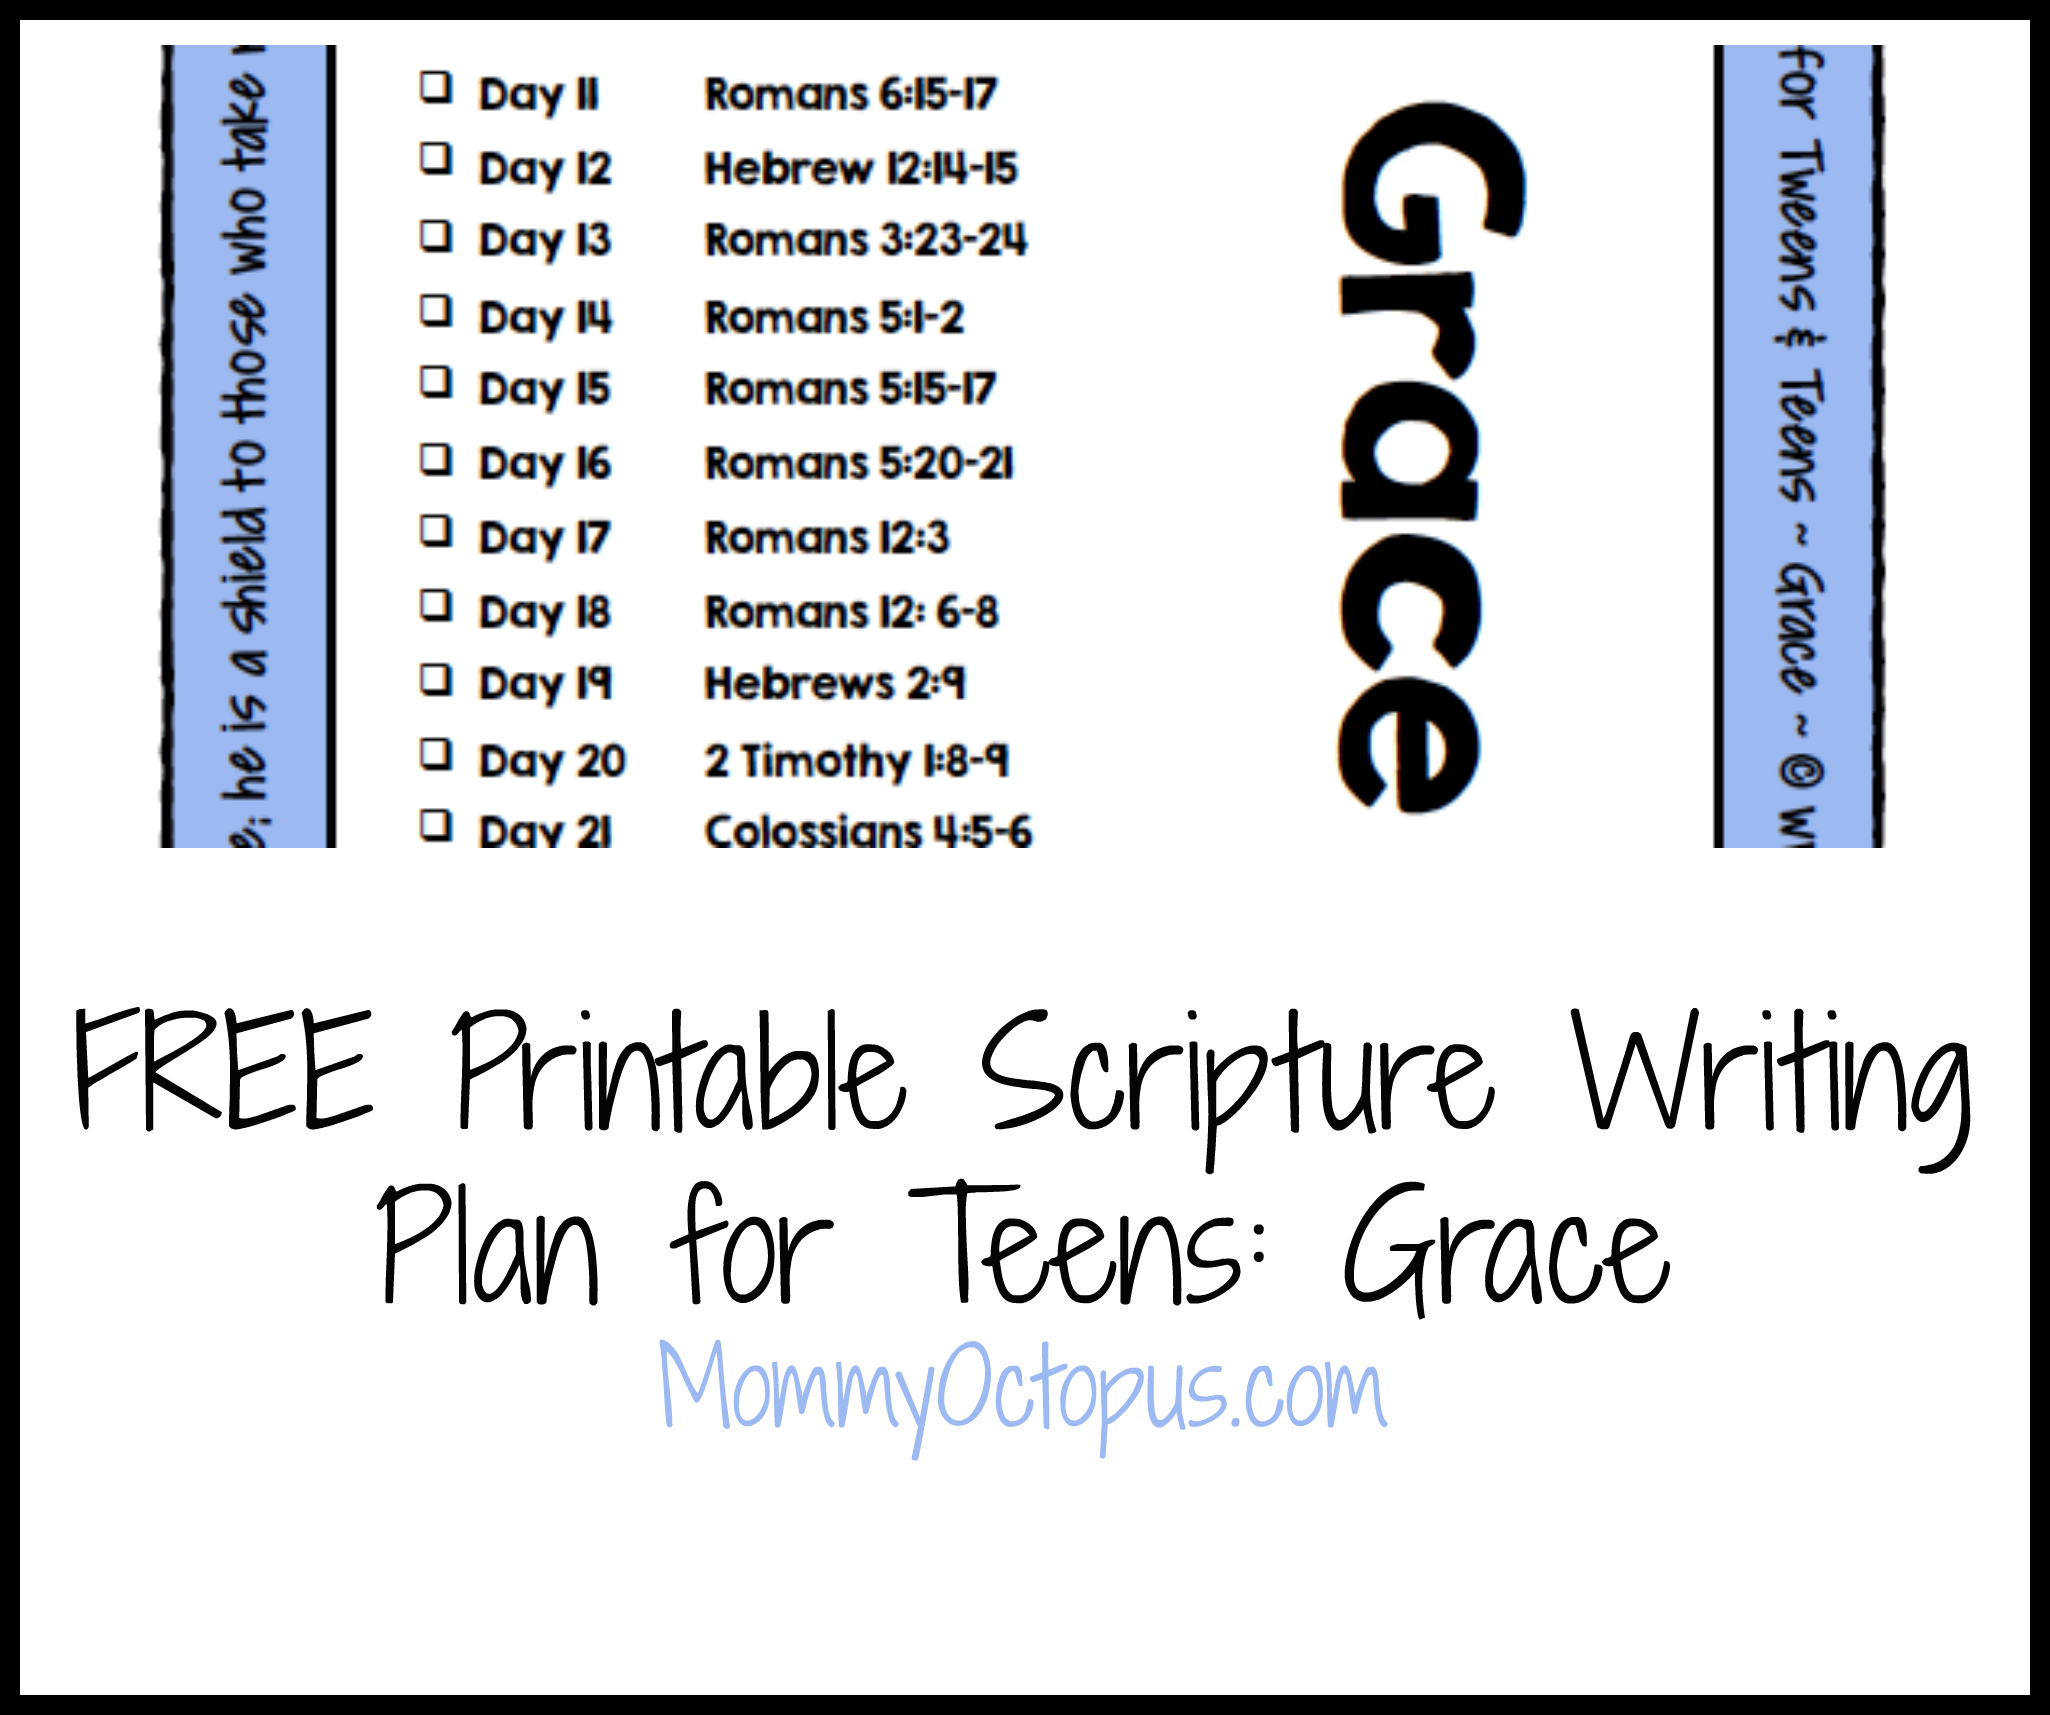 Free Printable Scripture Writing Plan for Teens Grace